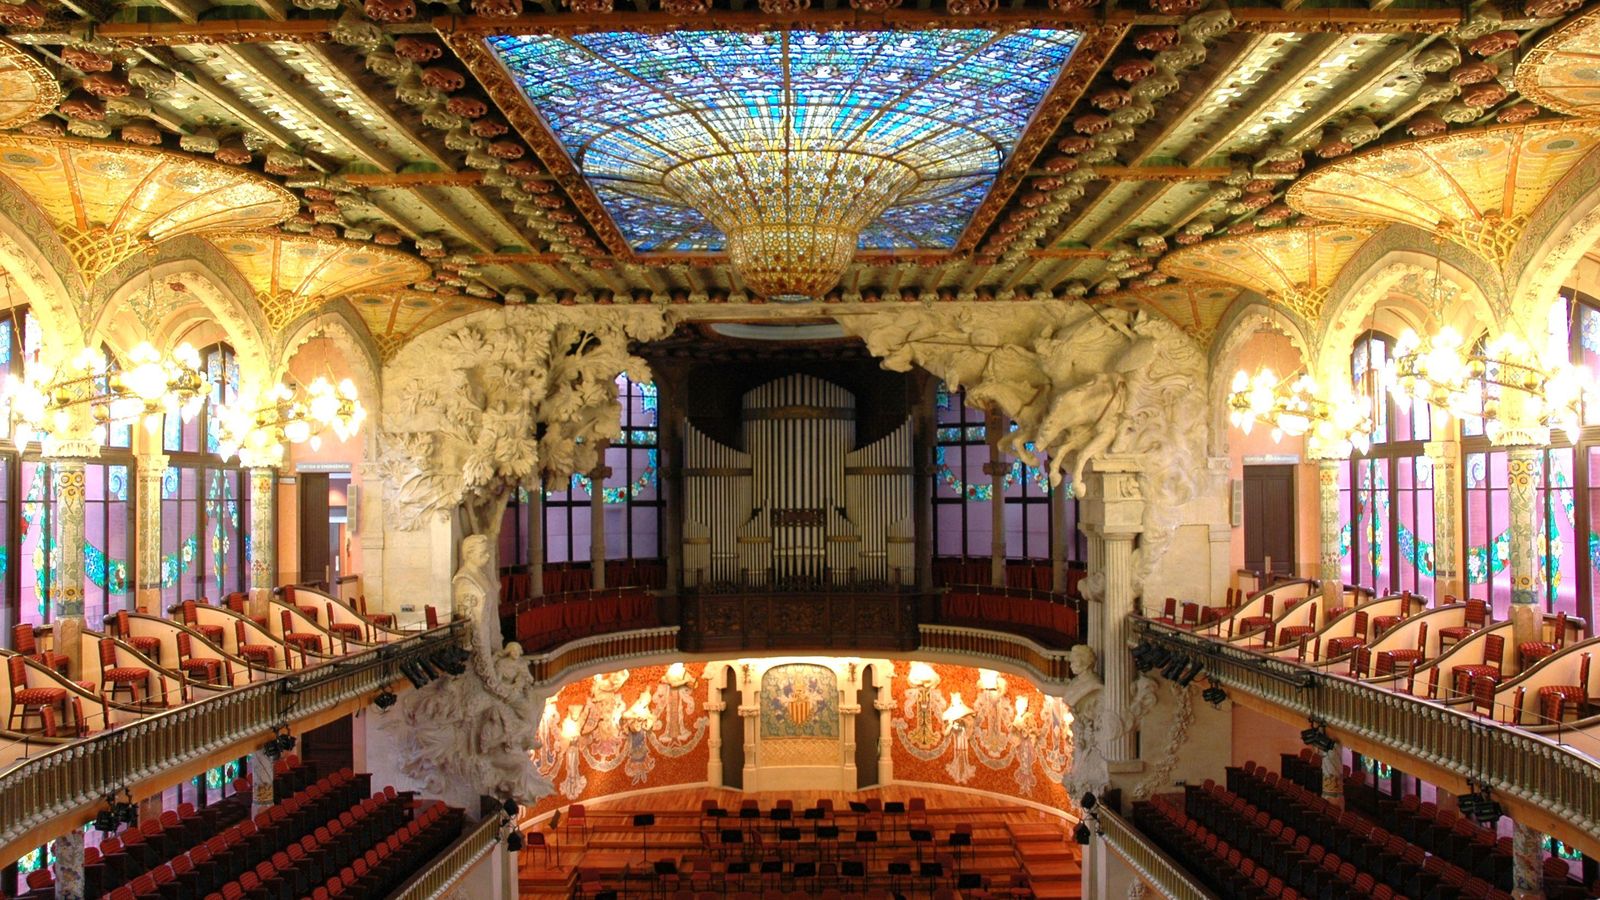 Foto: Palau de la Música (Lohen11, Wikipedia)